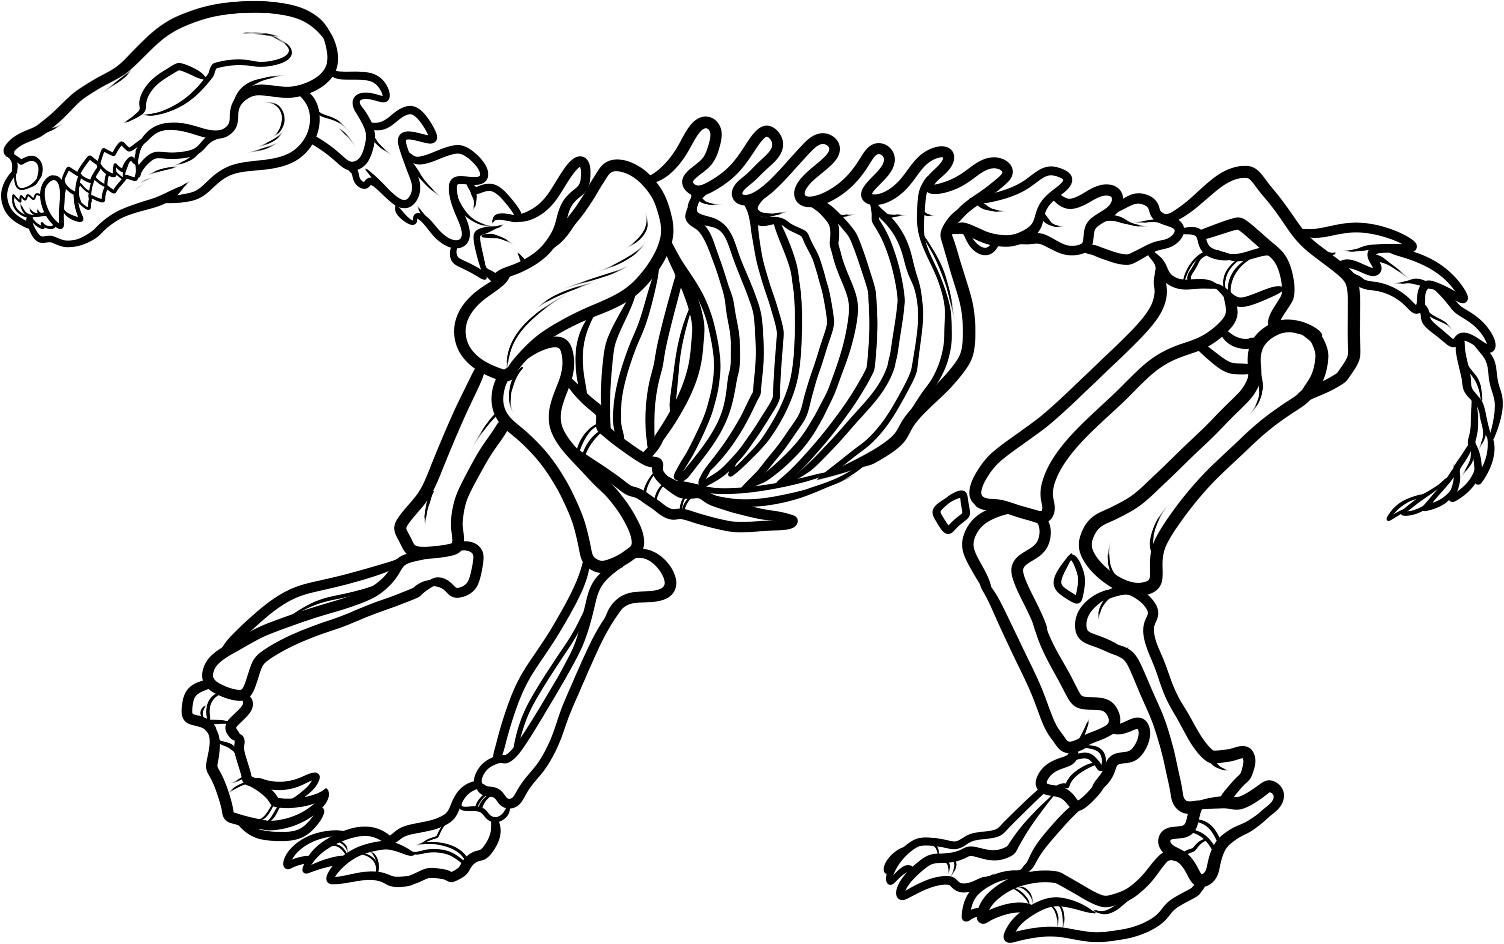 Dog skeleton clipart